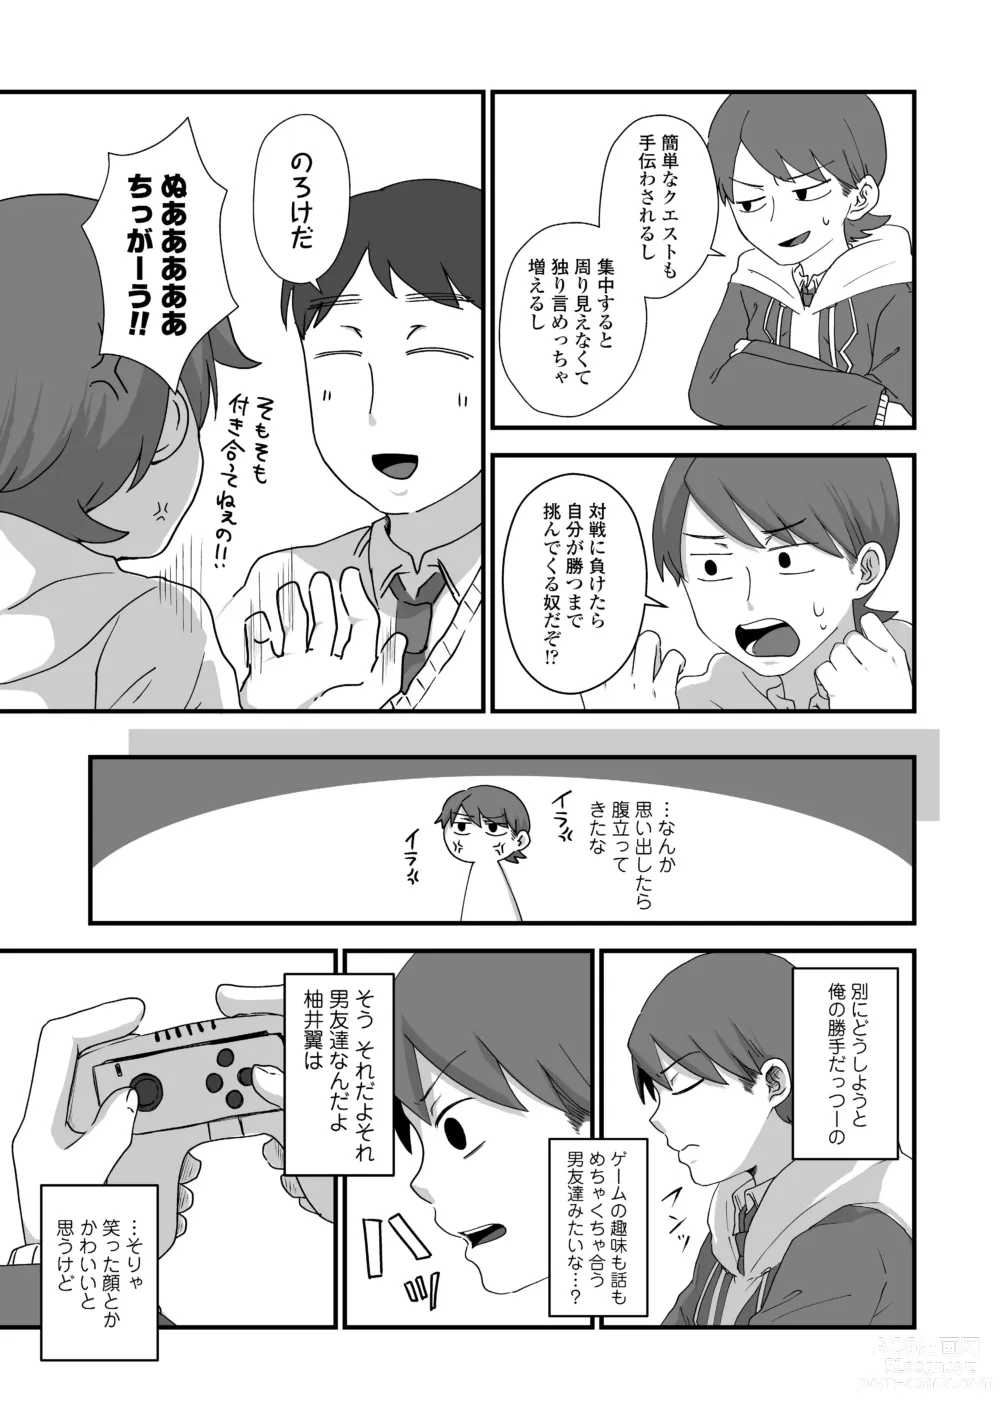 Page 9 of manga Futari Play